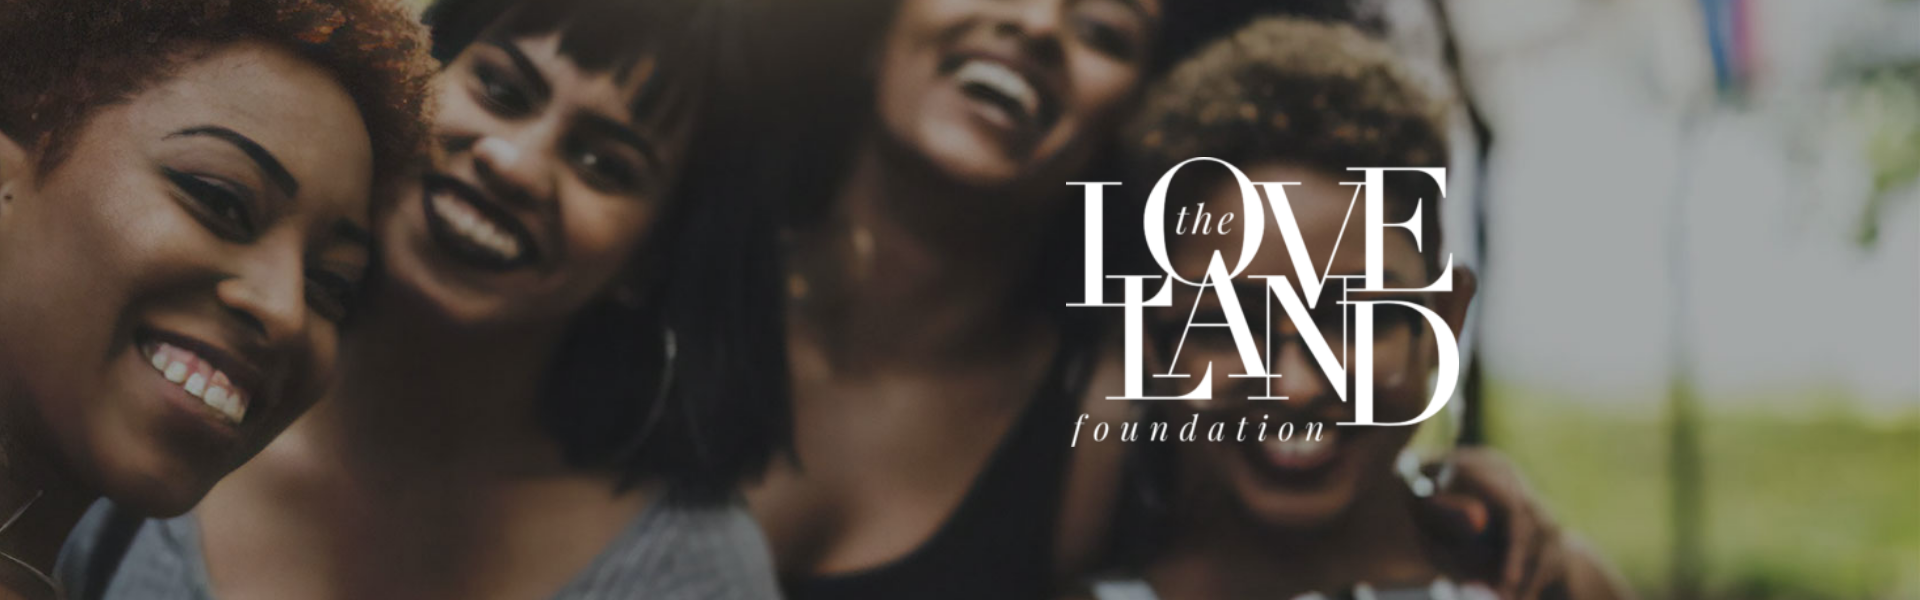 Pai x The
Loveland
Foundation